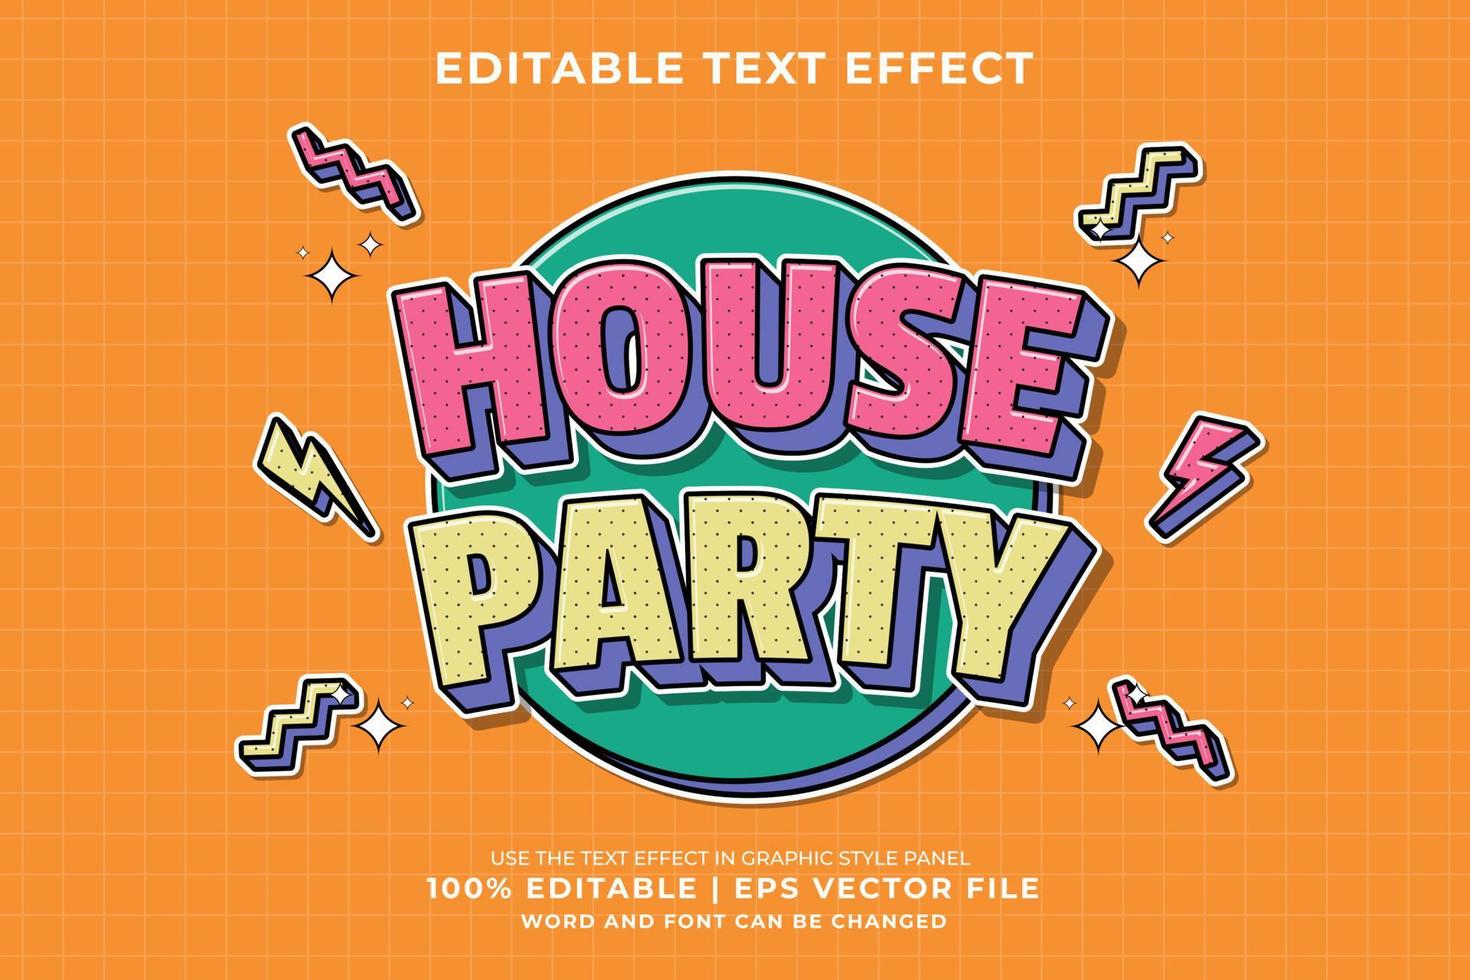 Editable text effect - House Party Cartoon template style premium vector